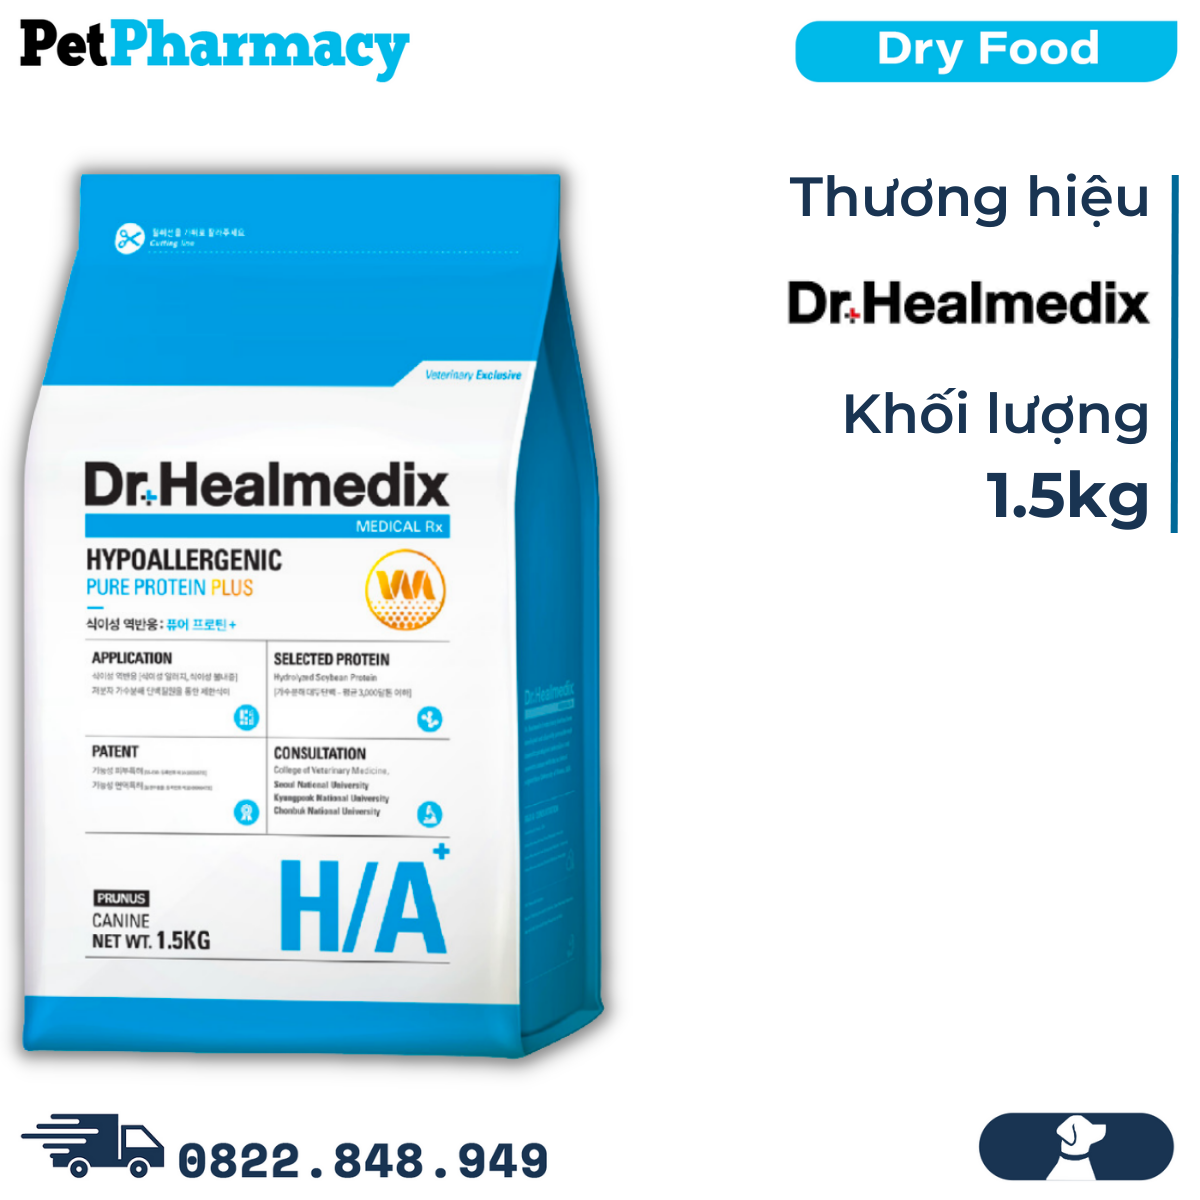  Thức ăn chó Dr.Healmedix Hypoallergenic Pure Protein Plus H/A 1.5kg - Hỗ trợ giảm dị ứng PetPharmacy 